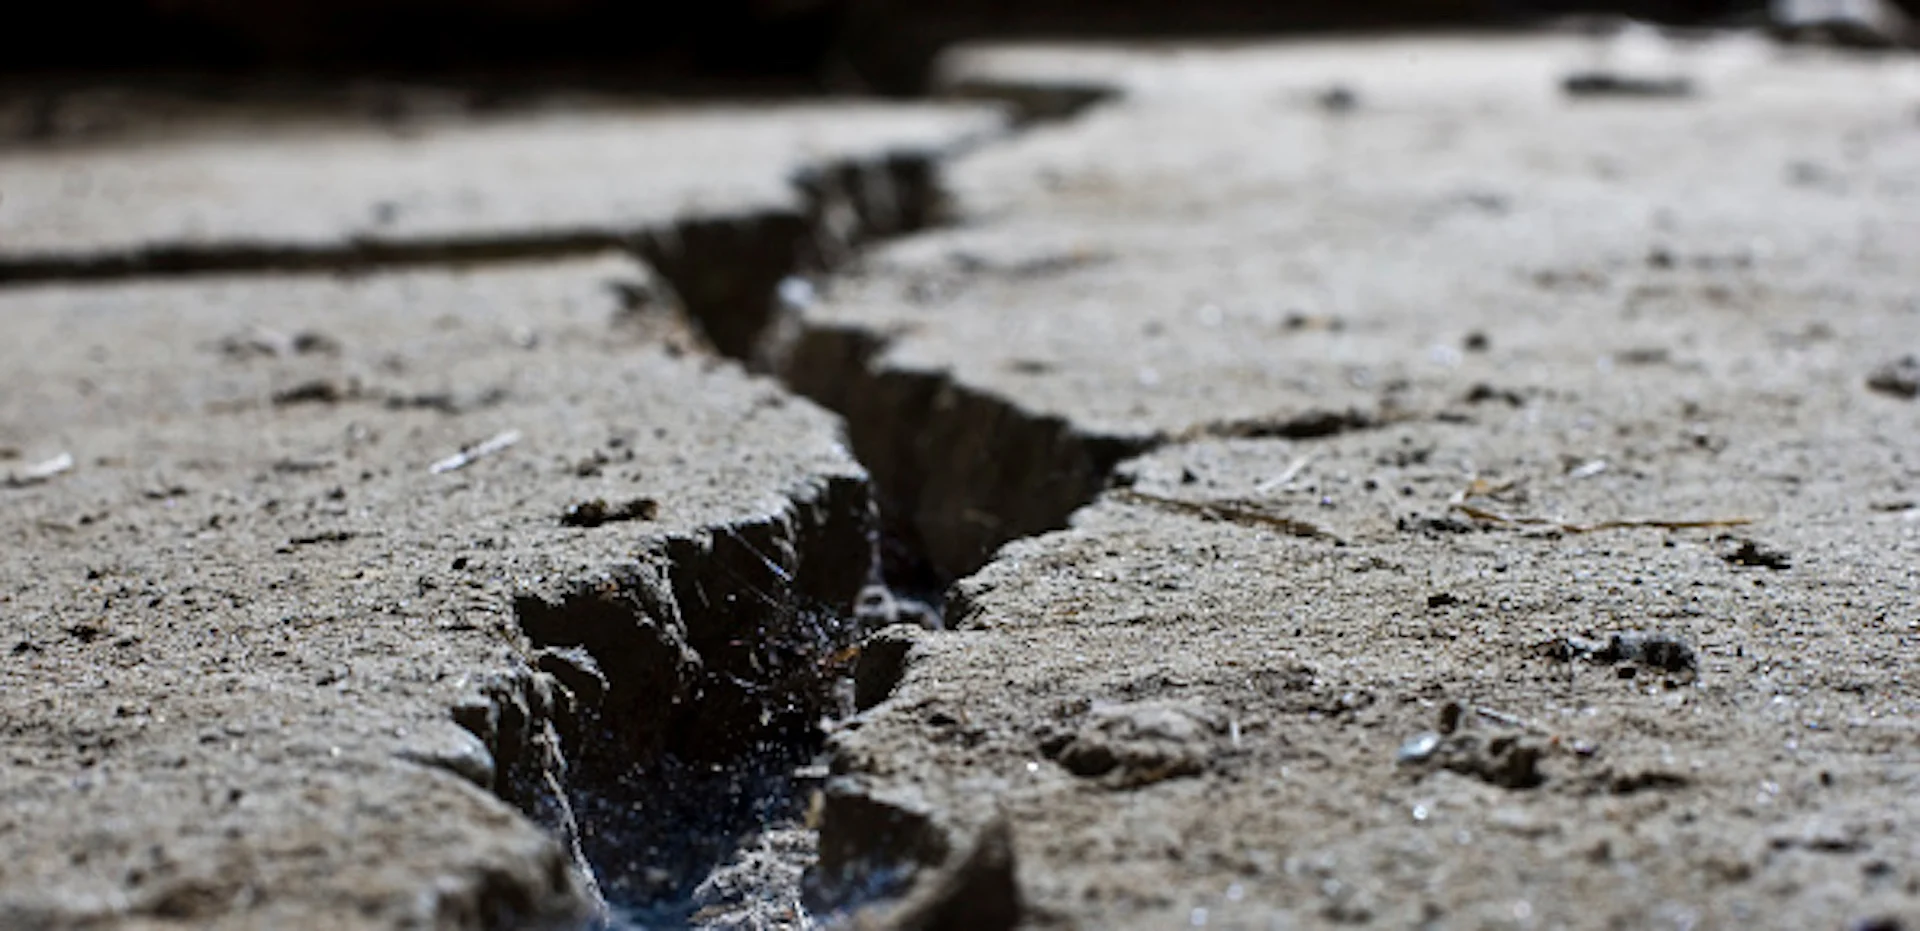 Despite Thursday's tremor, California remains in 'quake drought'